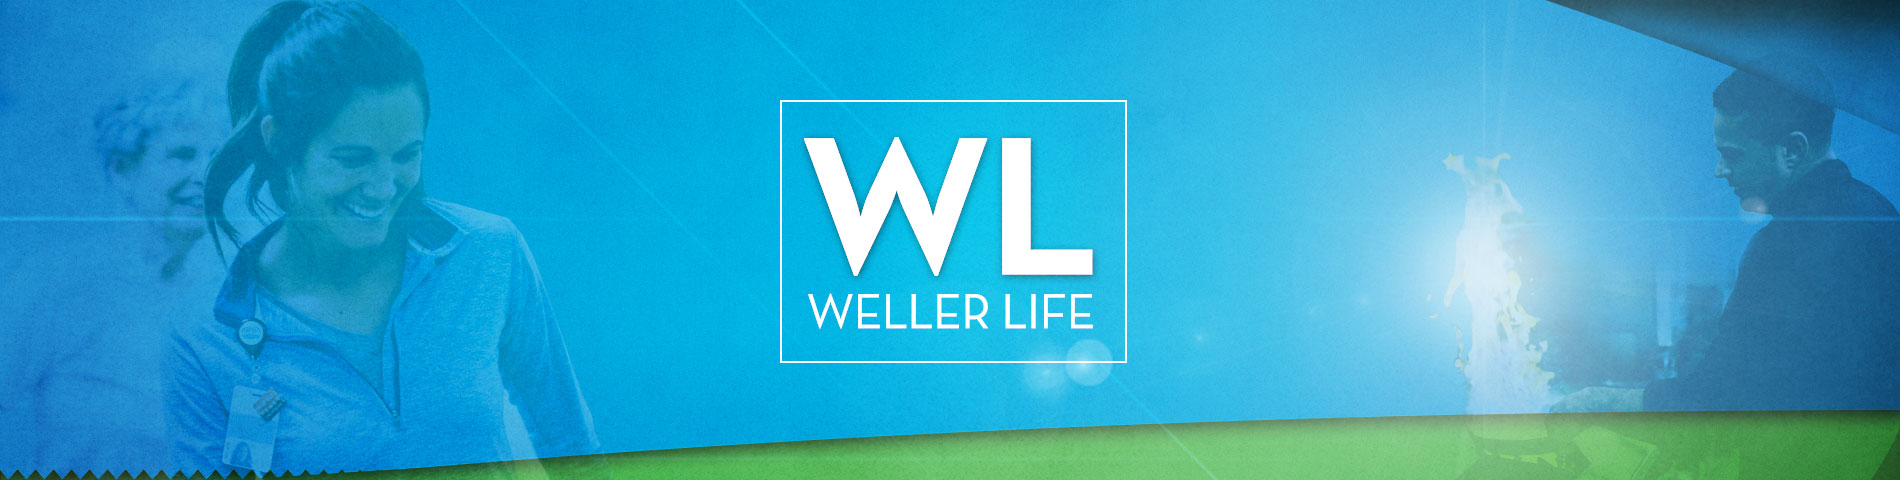 The Weller Life